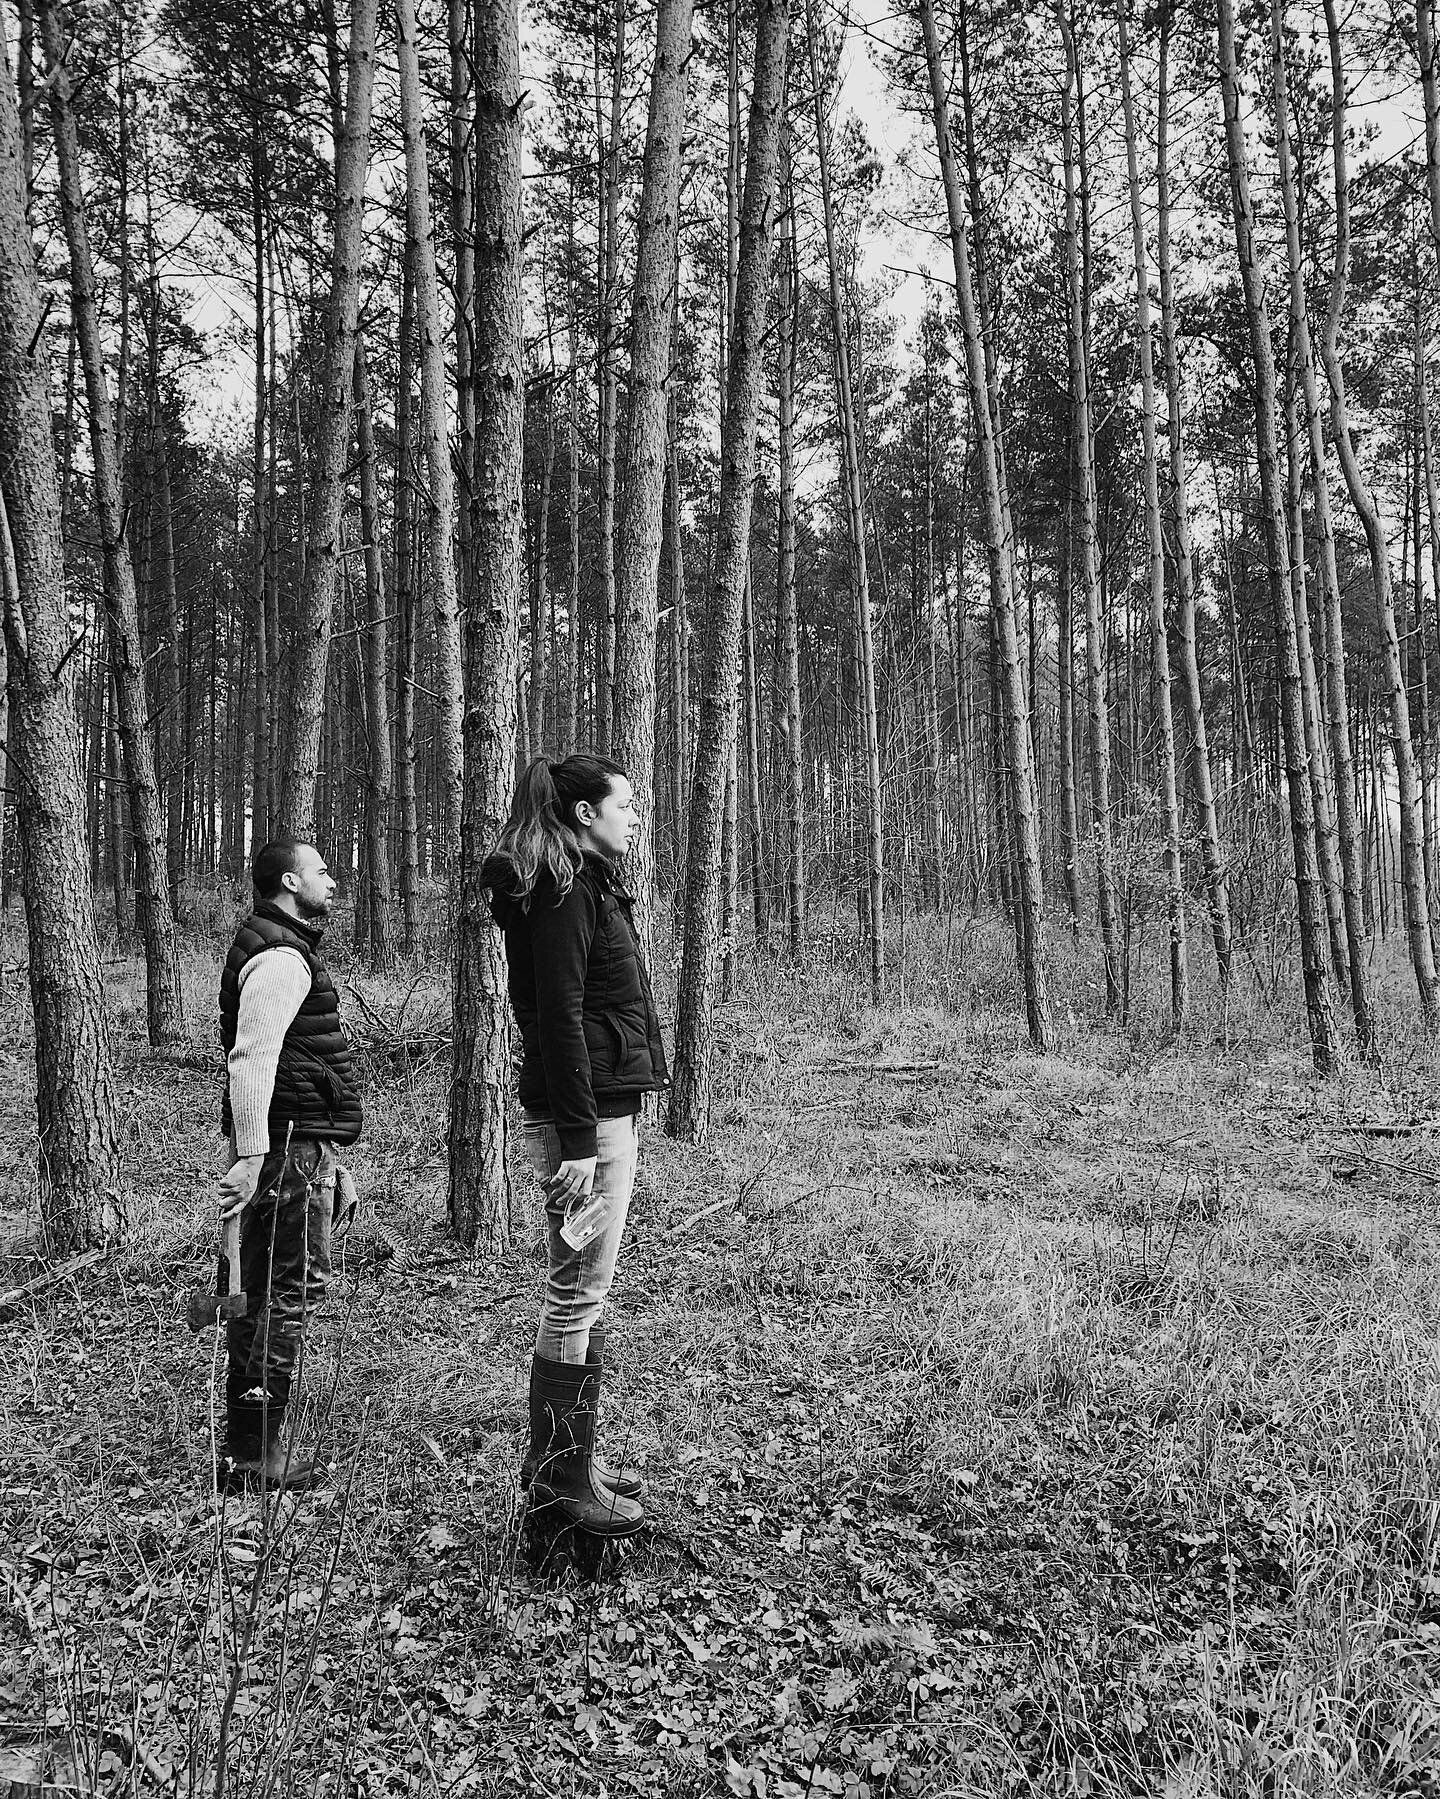 A couple of my favourite humans being trees.
~
Ian &amp; Loreta in their back garden.
Alytus, Lithuania.
@ian_kane83 / @sabonytl 
~
#anapryor #anapryorshoots #amateurphotographer #nikon #nikond5000 #nikonphotography #shotwithnikon #londonphotographer